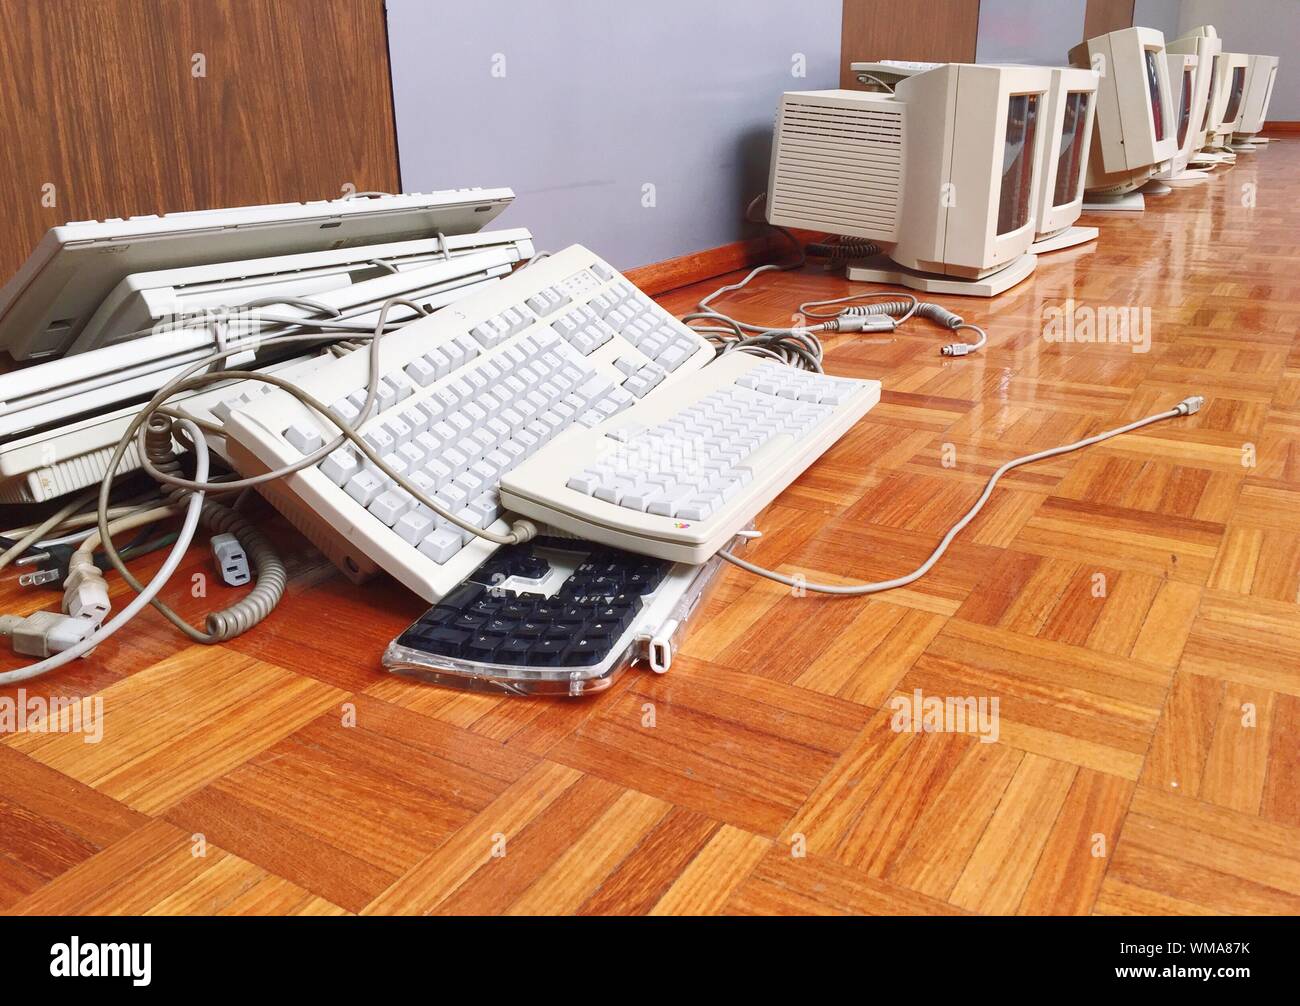 Computer Monitors And Keyboards On Hardwood Floor Stock Photo